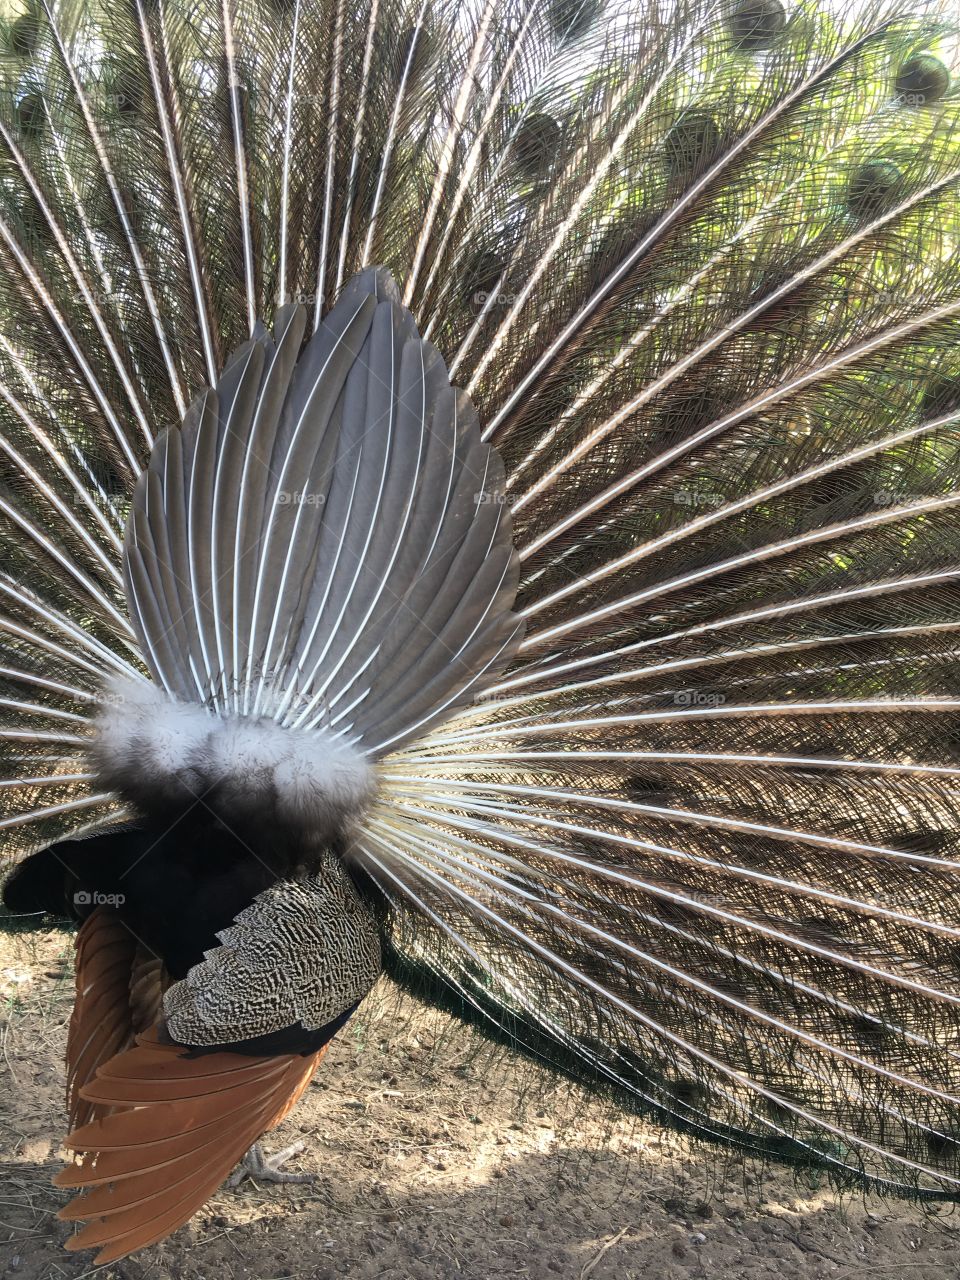 Peacock dance